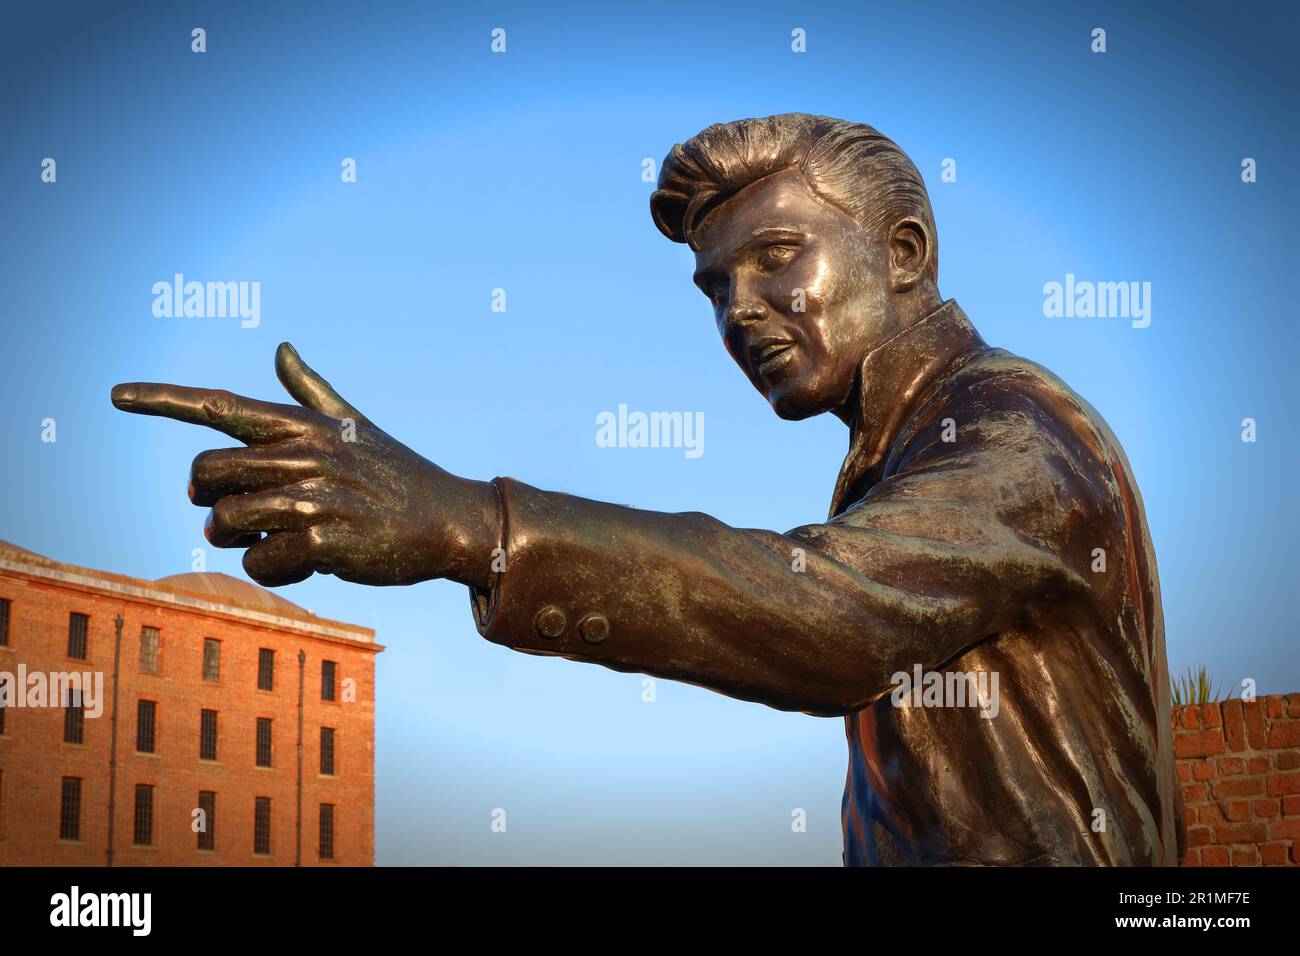 Statua commemorativa di Billy Fury, Albert Dock, Pierhead, Kings Parade, Royal Albert Dock, Hartley Quay, Liverpool L3 4AQ Foto Stock